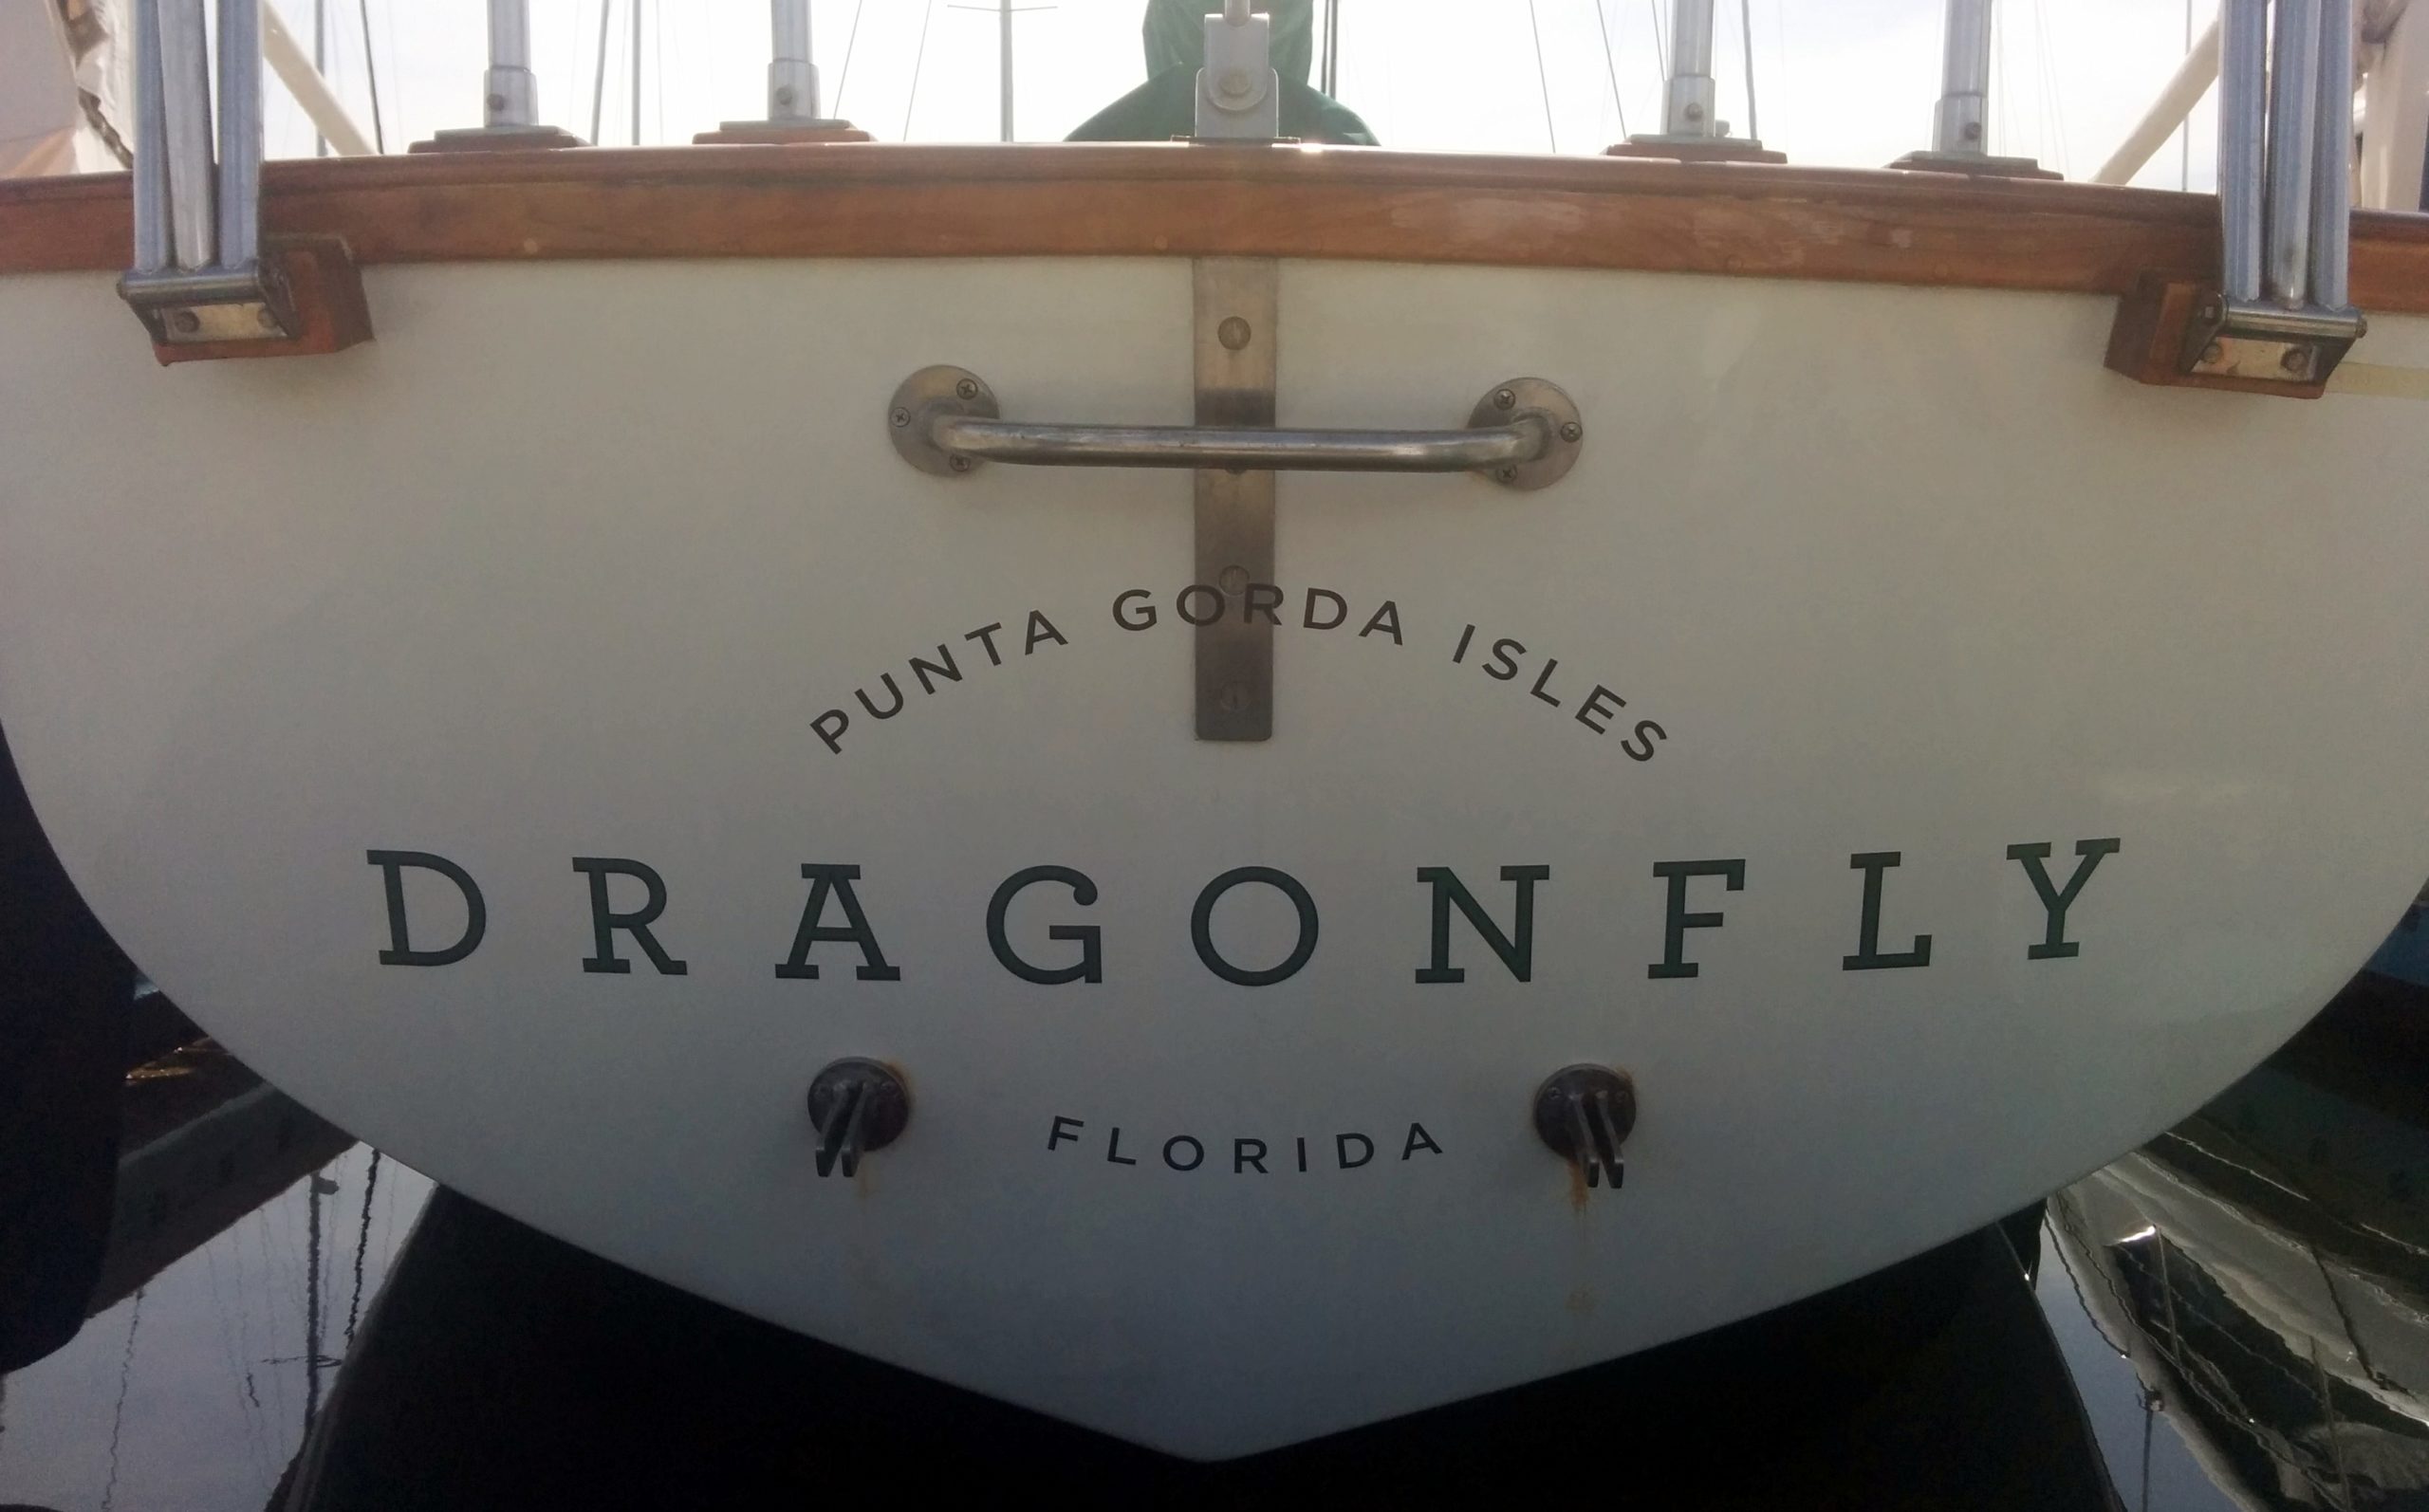 Dragonfly boat lettering